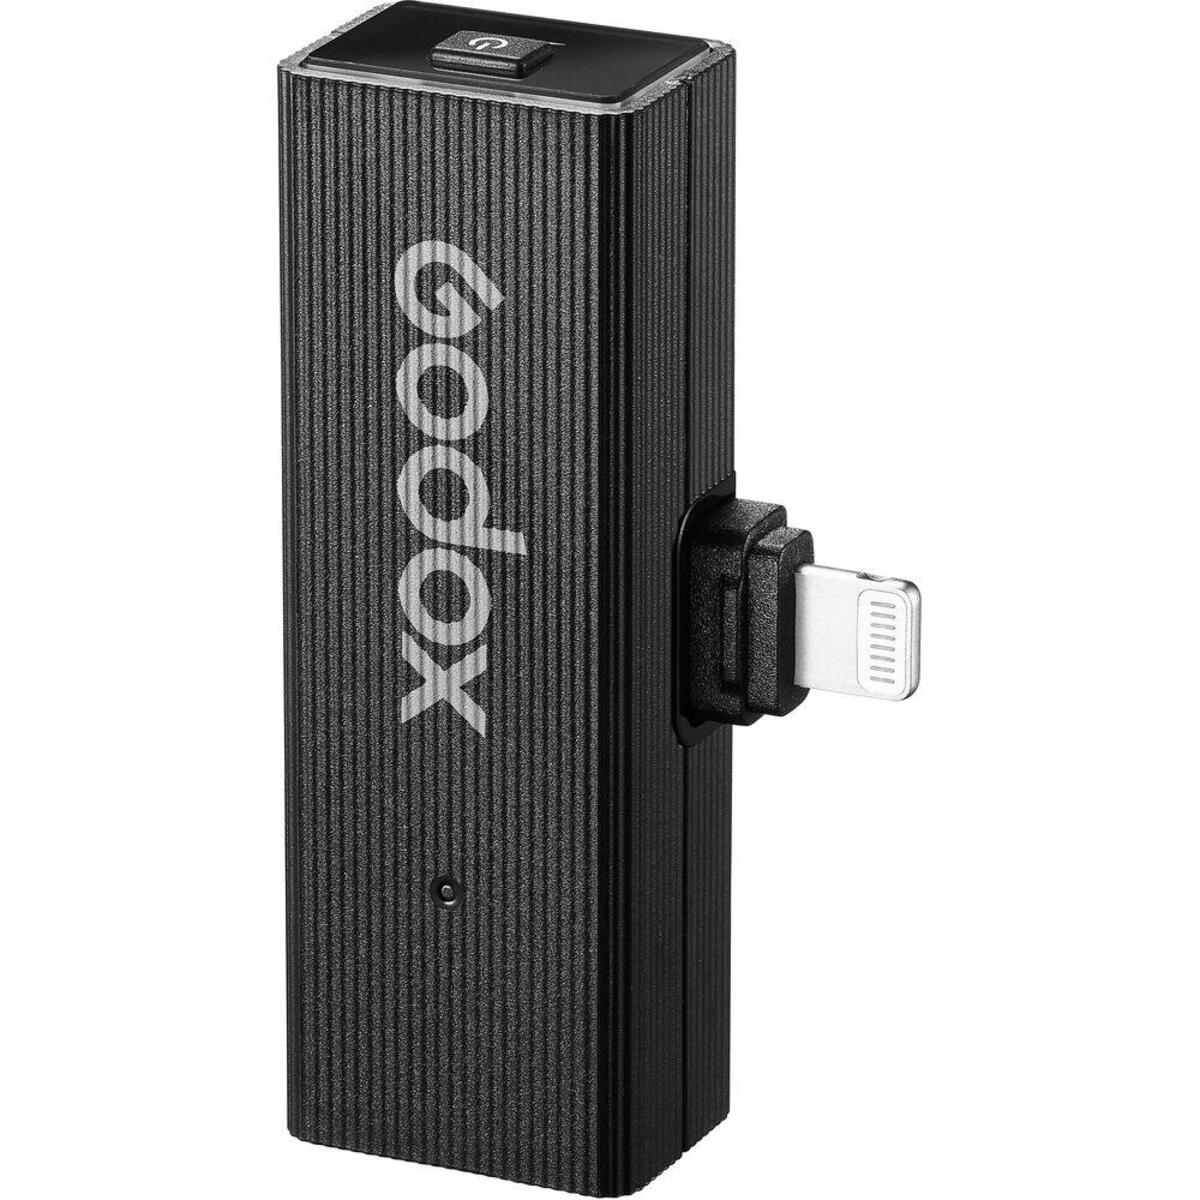 Godox MoveLink Mini LT Kit 2 (Black)